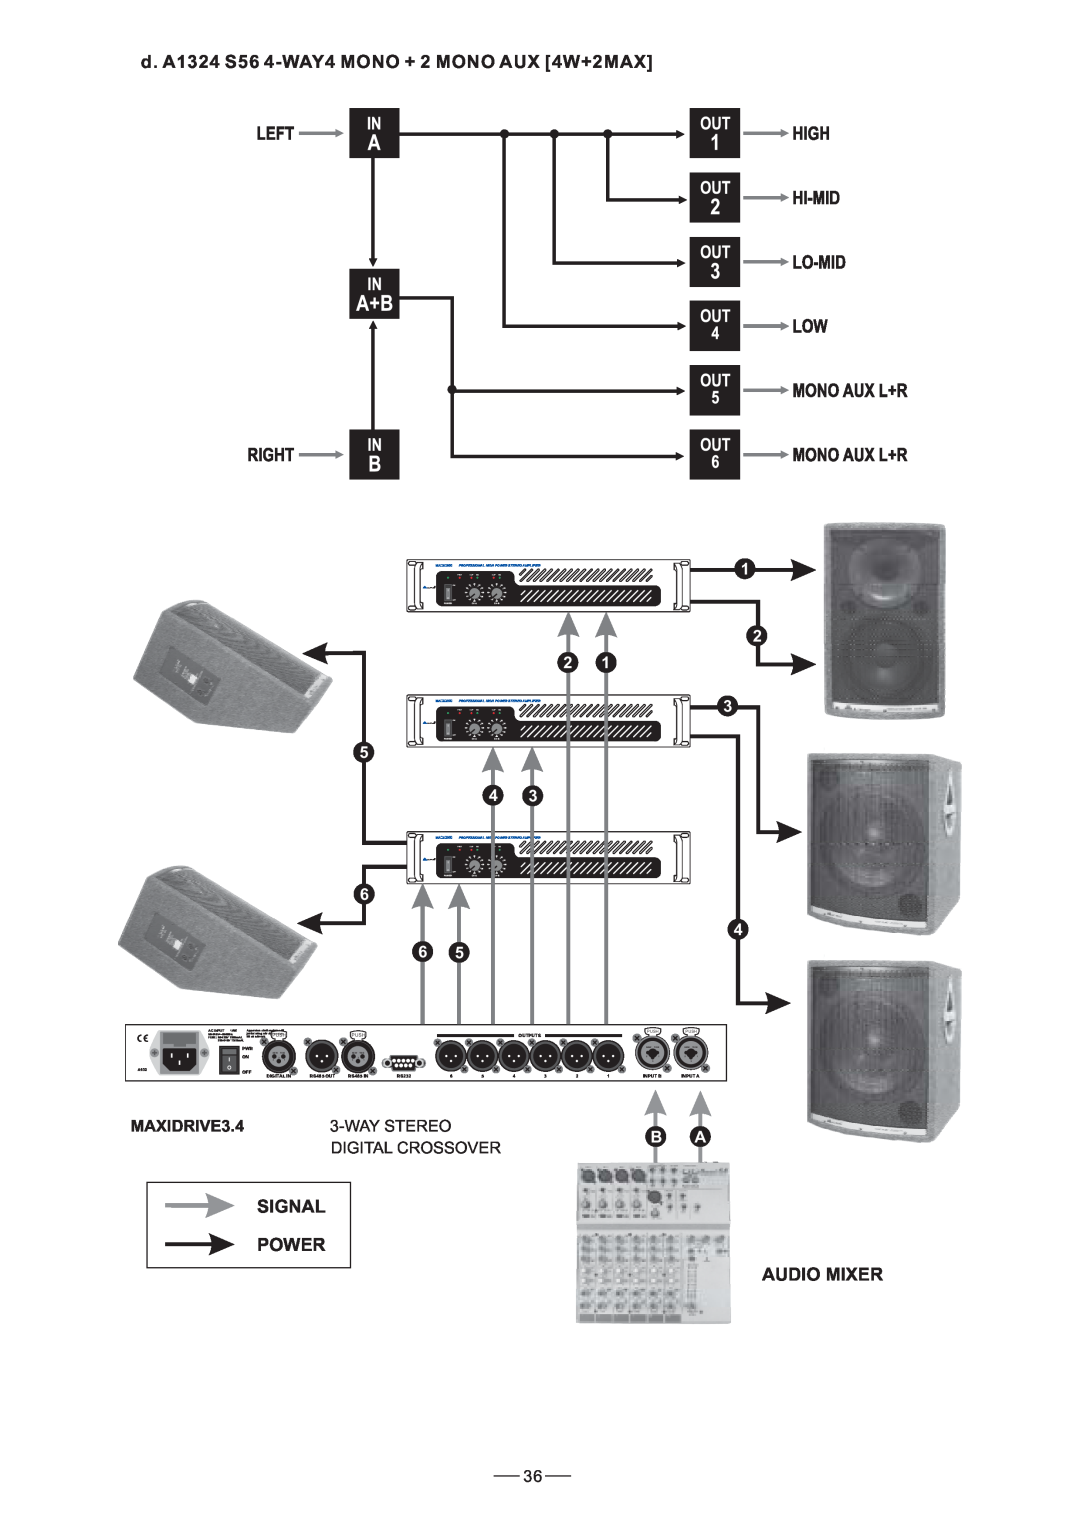 Nilfisk-ALTO 3.4 d. A1324 S56 4-WAY4MONO + 2 MONO AUX 4W+2MAX, Signal Power Audio Mixer, Waystereo, Digital Crossover 